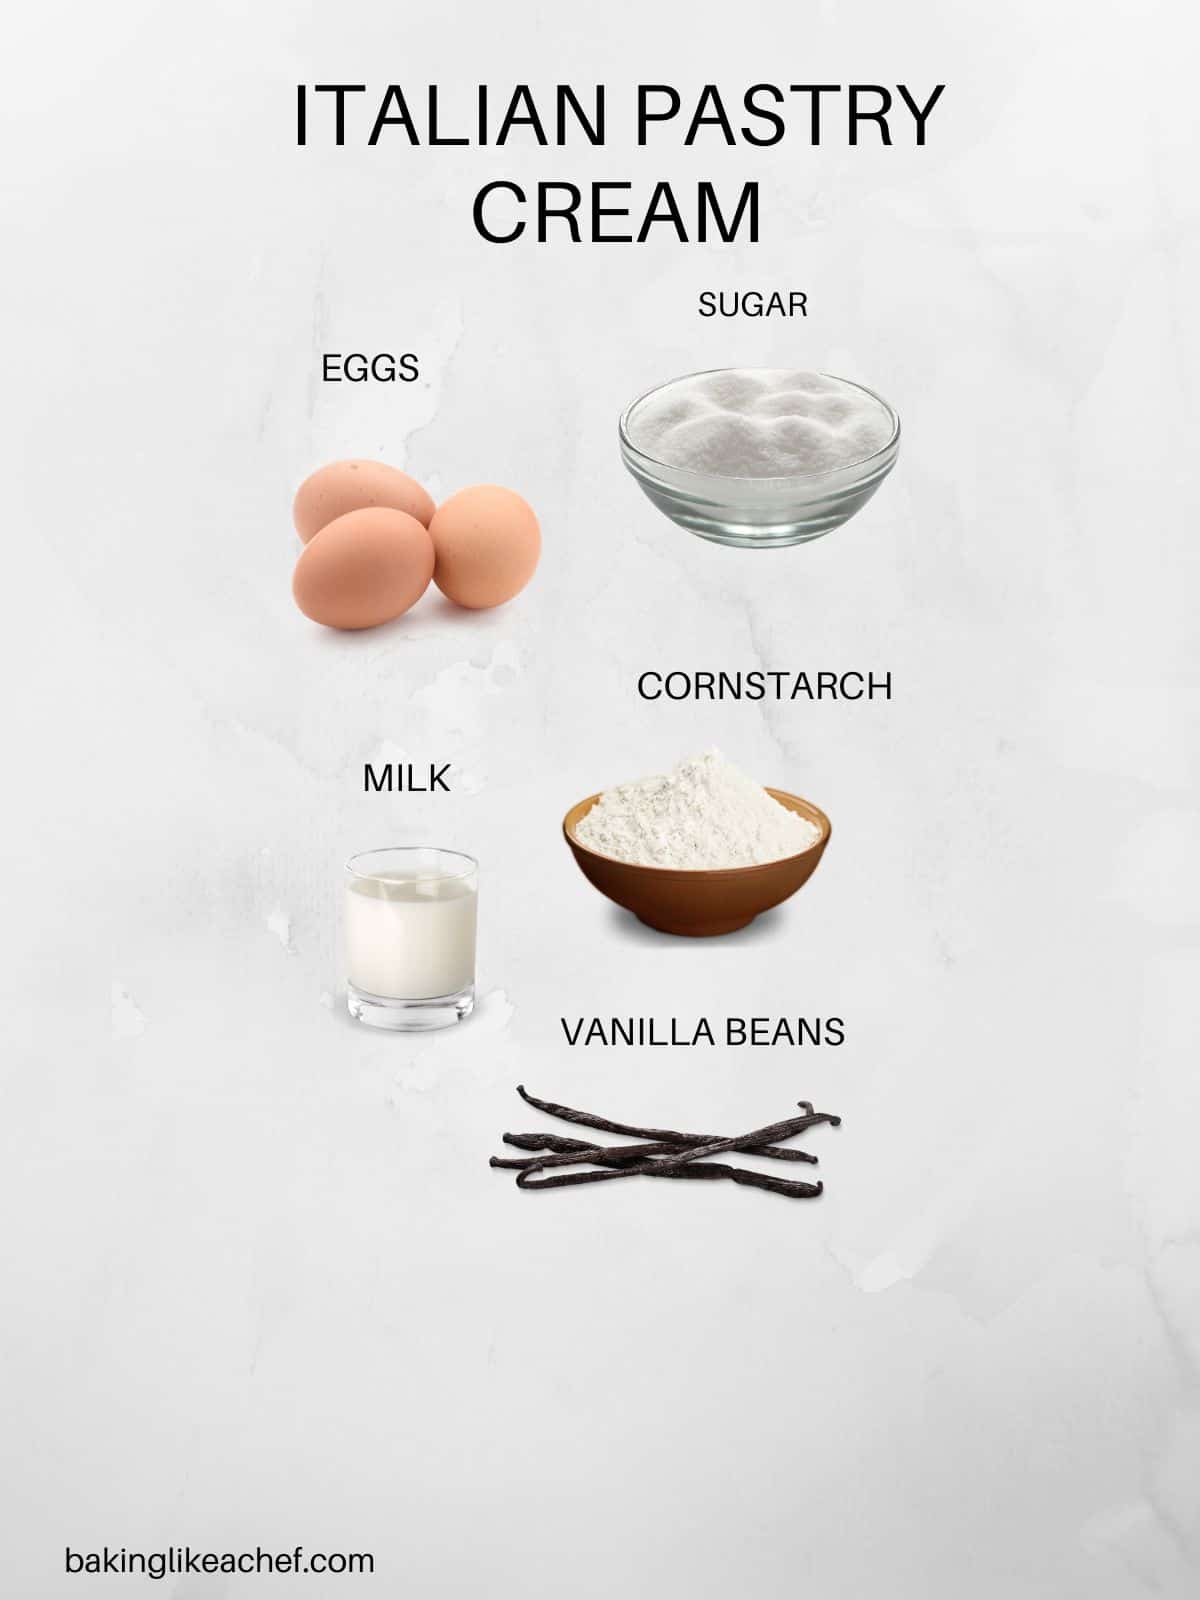 Italian pastry cream ingredients in pictures